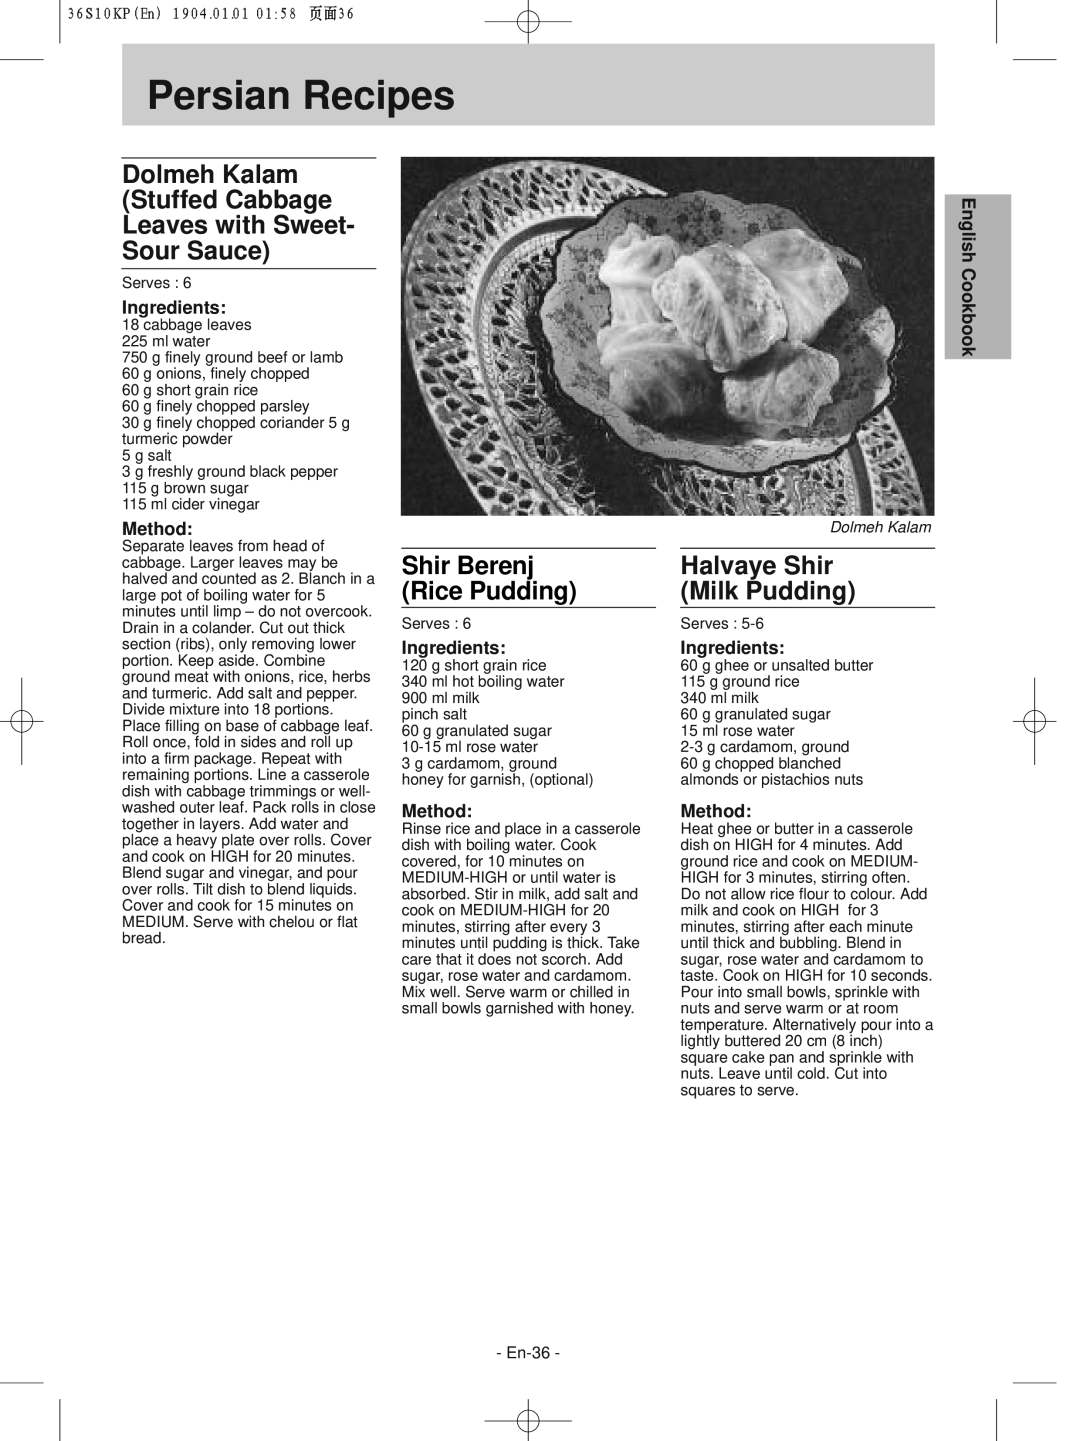 Panasonic NN-S215WF Halvaye Shir Milk Pudding, Dolmeh Kalam Stuffed Cabbage Leaves with Sweet- Sour Sauce, Persian Recipes 